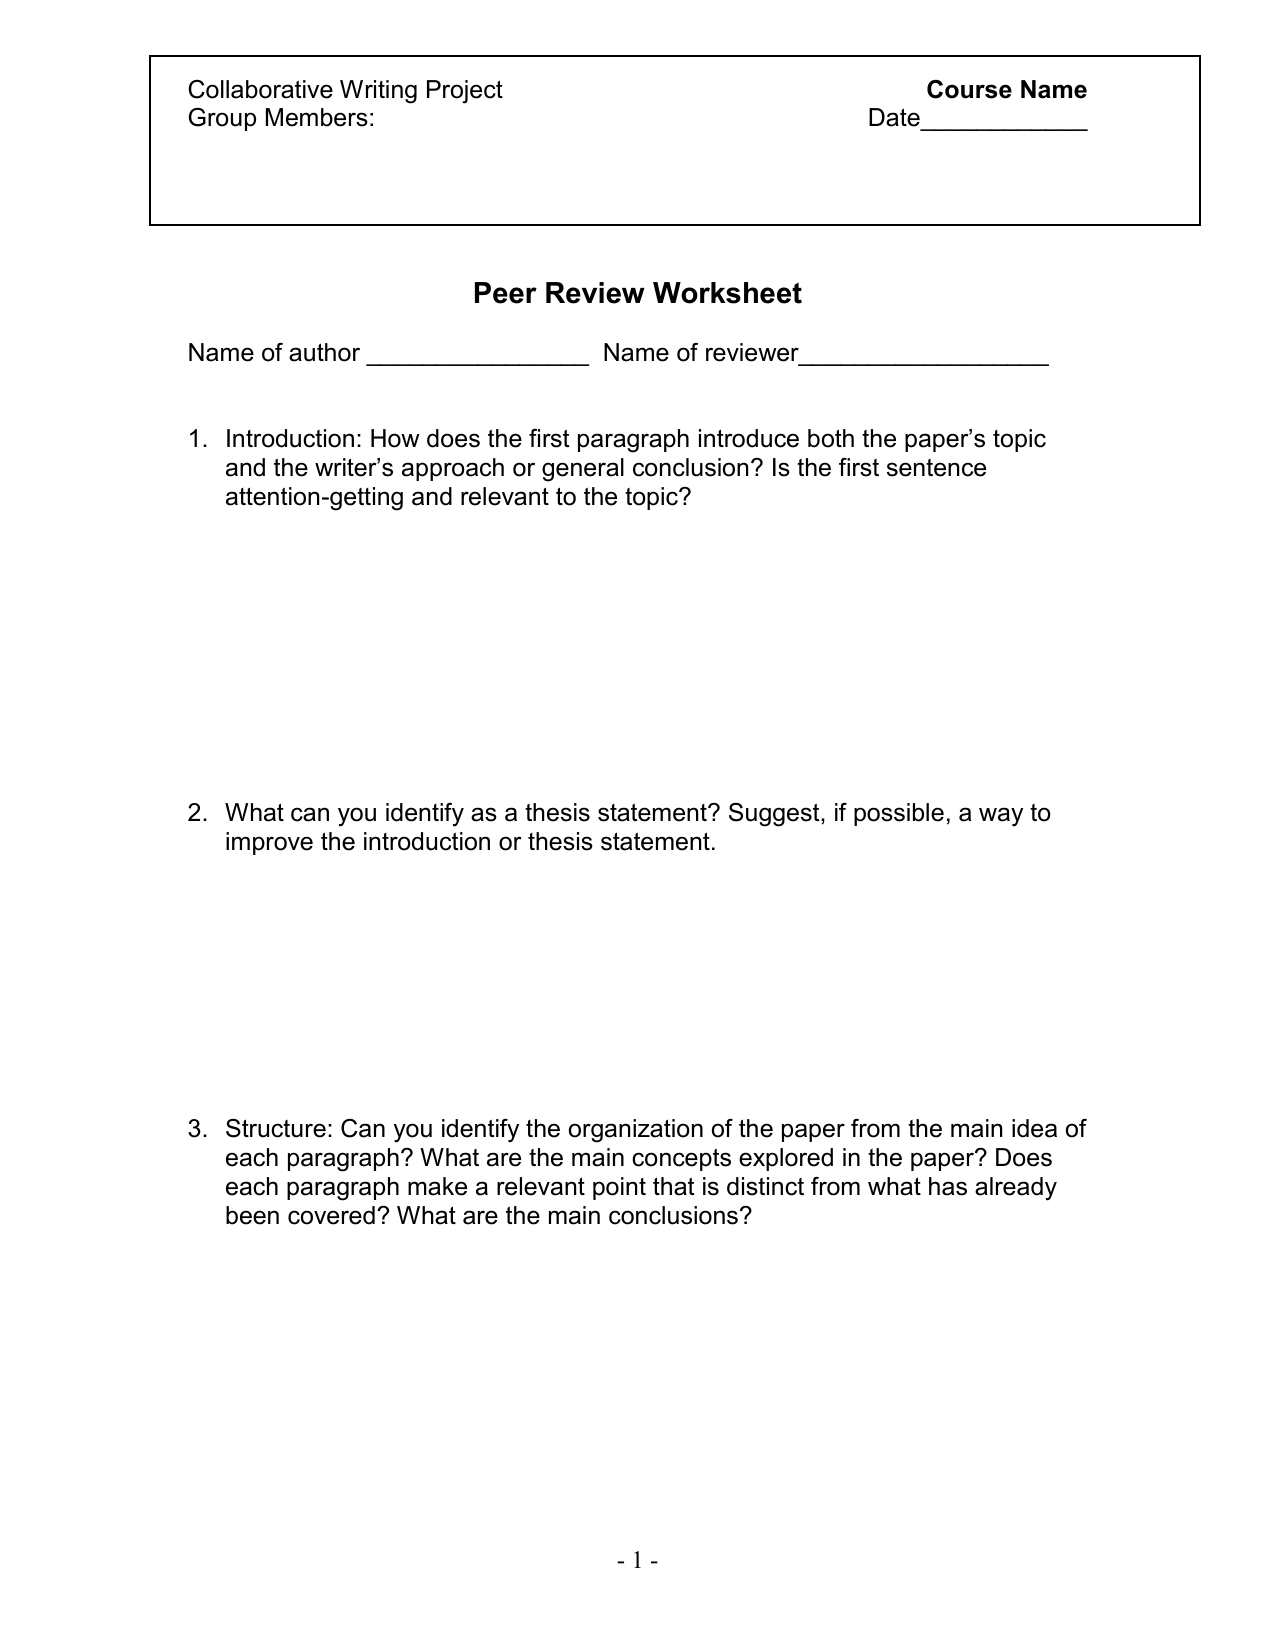 Collab Writing PEER REVIEW WORKSHEET Inside Identifying Thesis Statement Worksheet